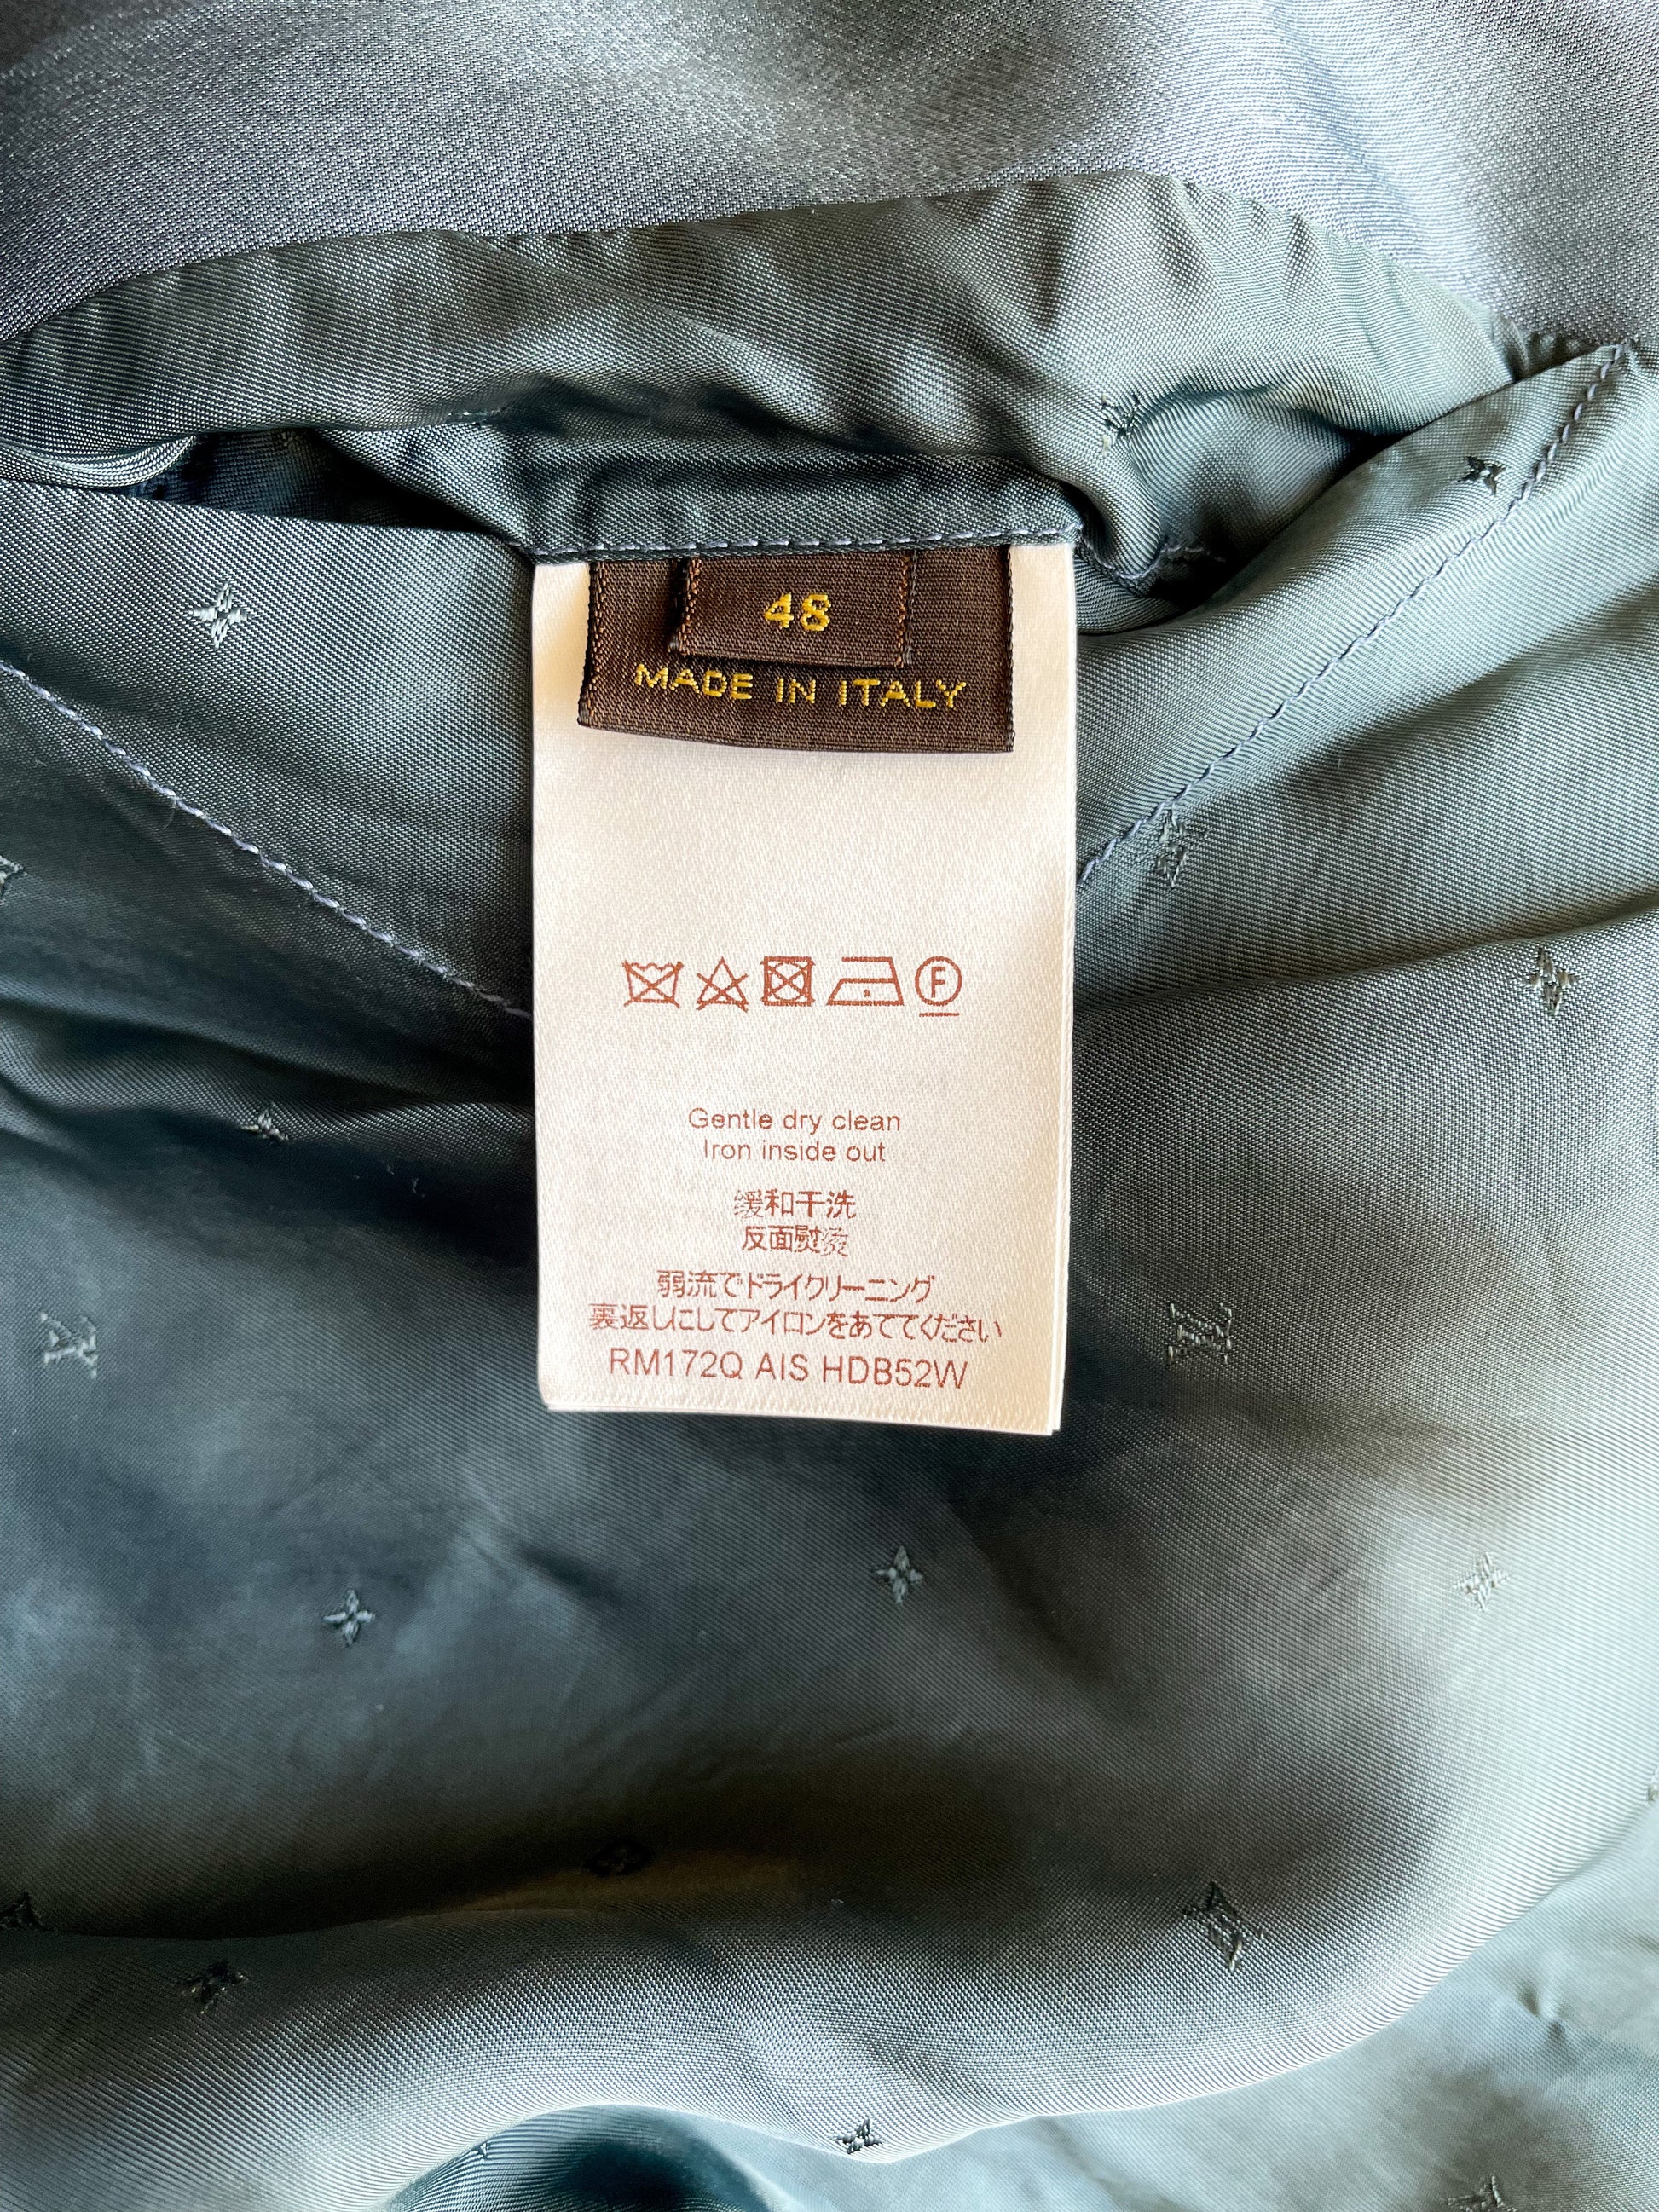 Louis Vuitton Upside Down Sweater – CnExclusives